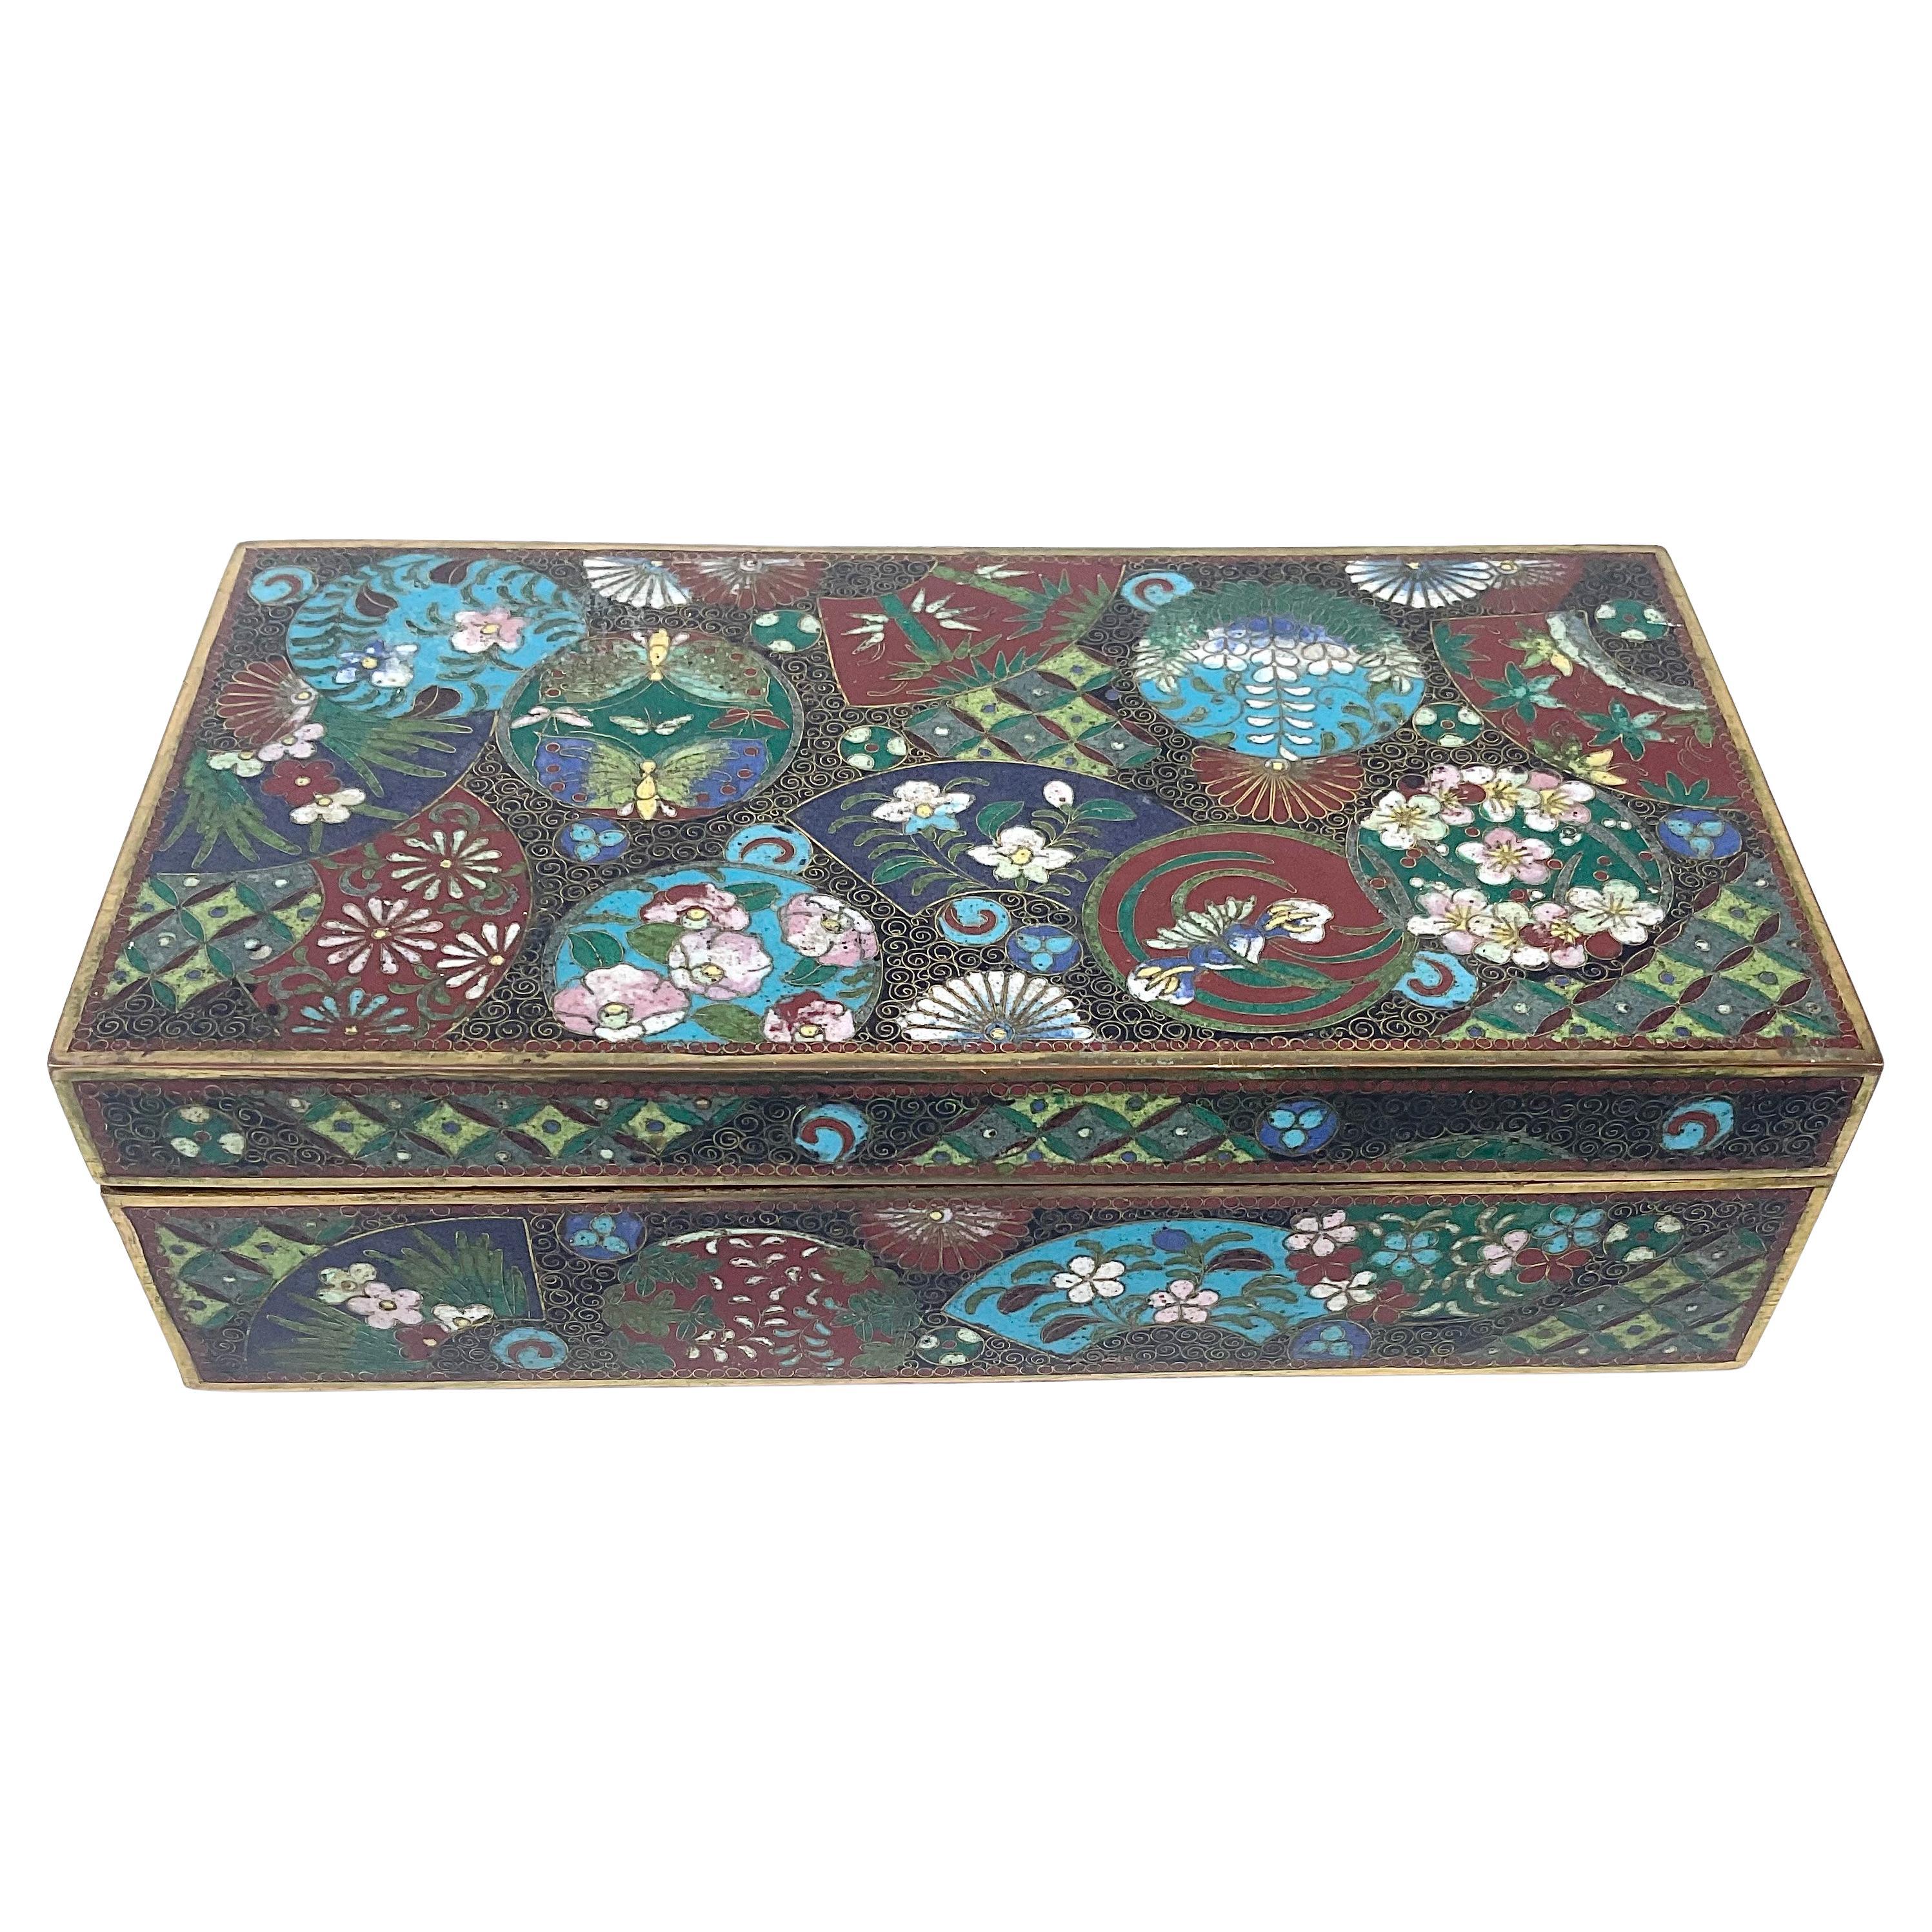 Japanese Cloisonne Detailed Antique Decorative Box Incredible Colors Design  For Sale